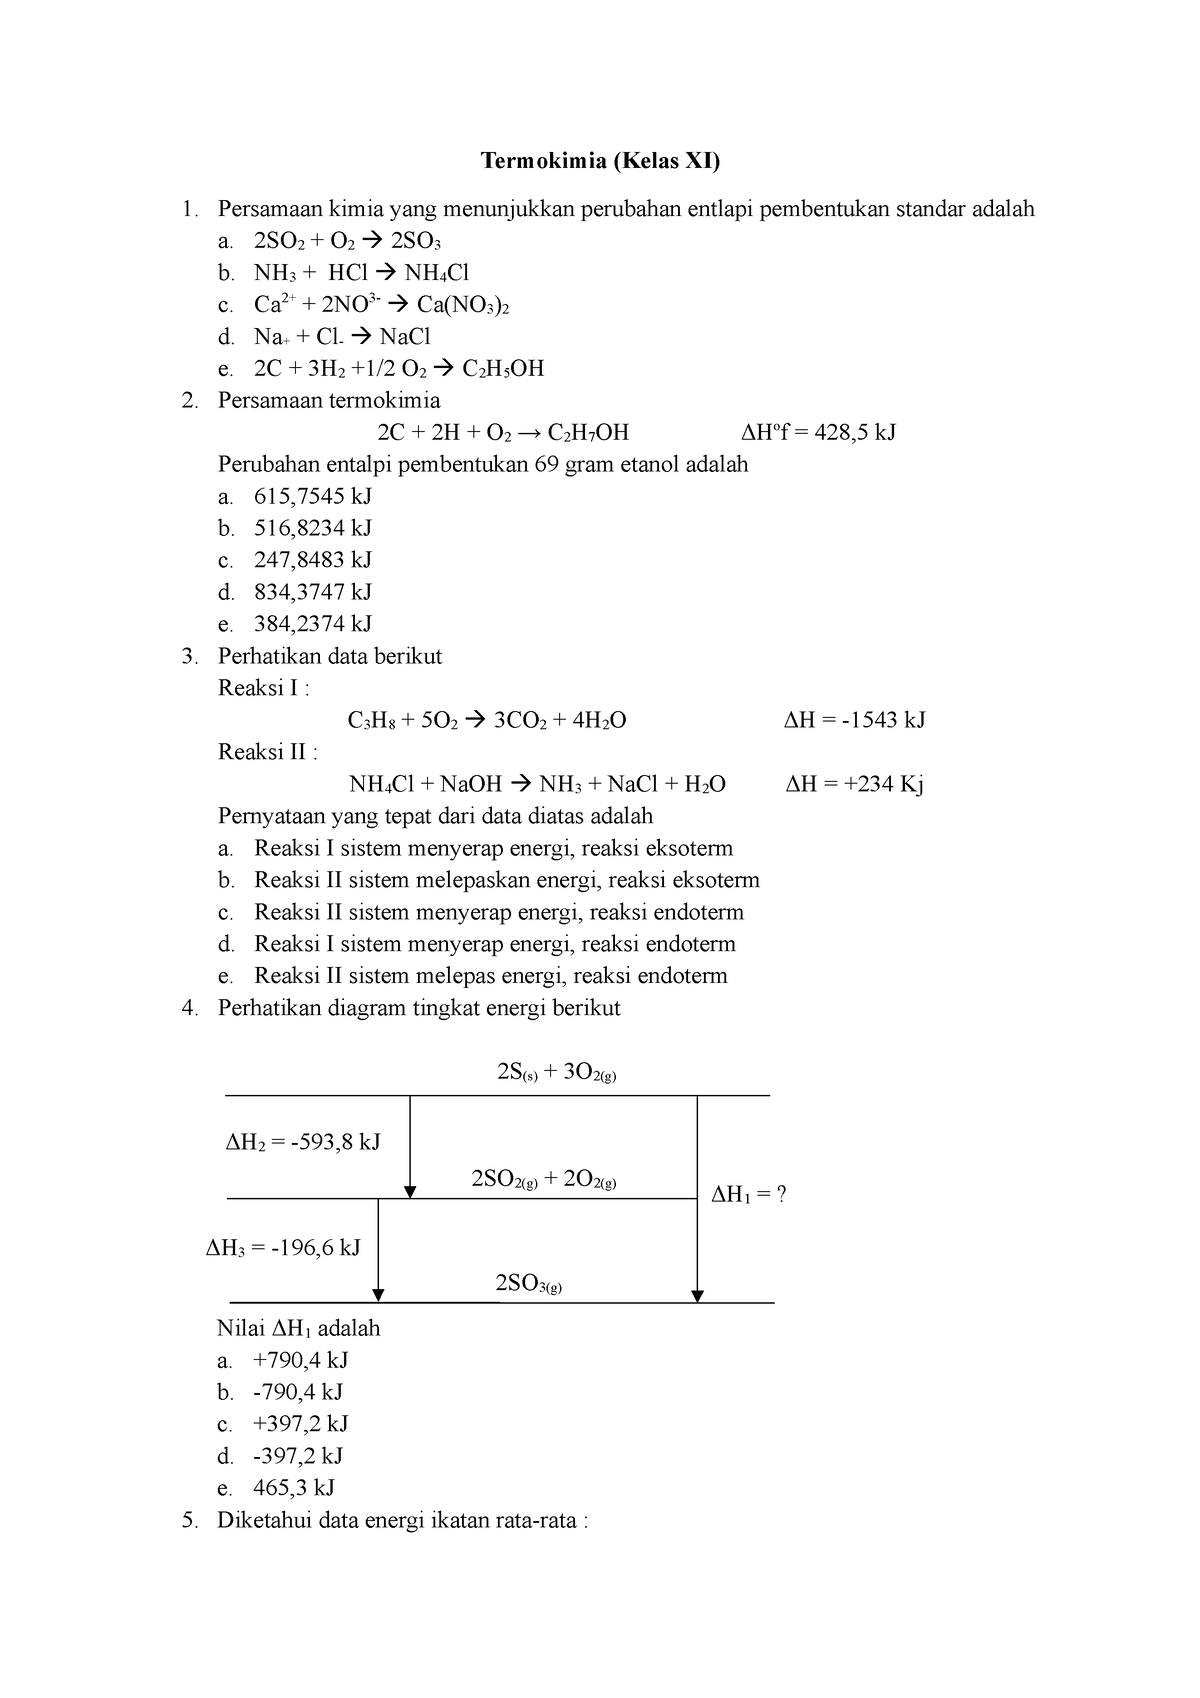 Soal Dan Pembahasan Termokimia Termokimia Kelas Xi Persamaan Kimia Yang Menunjukkan 6345